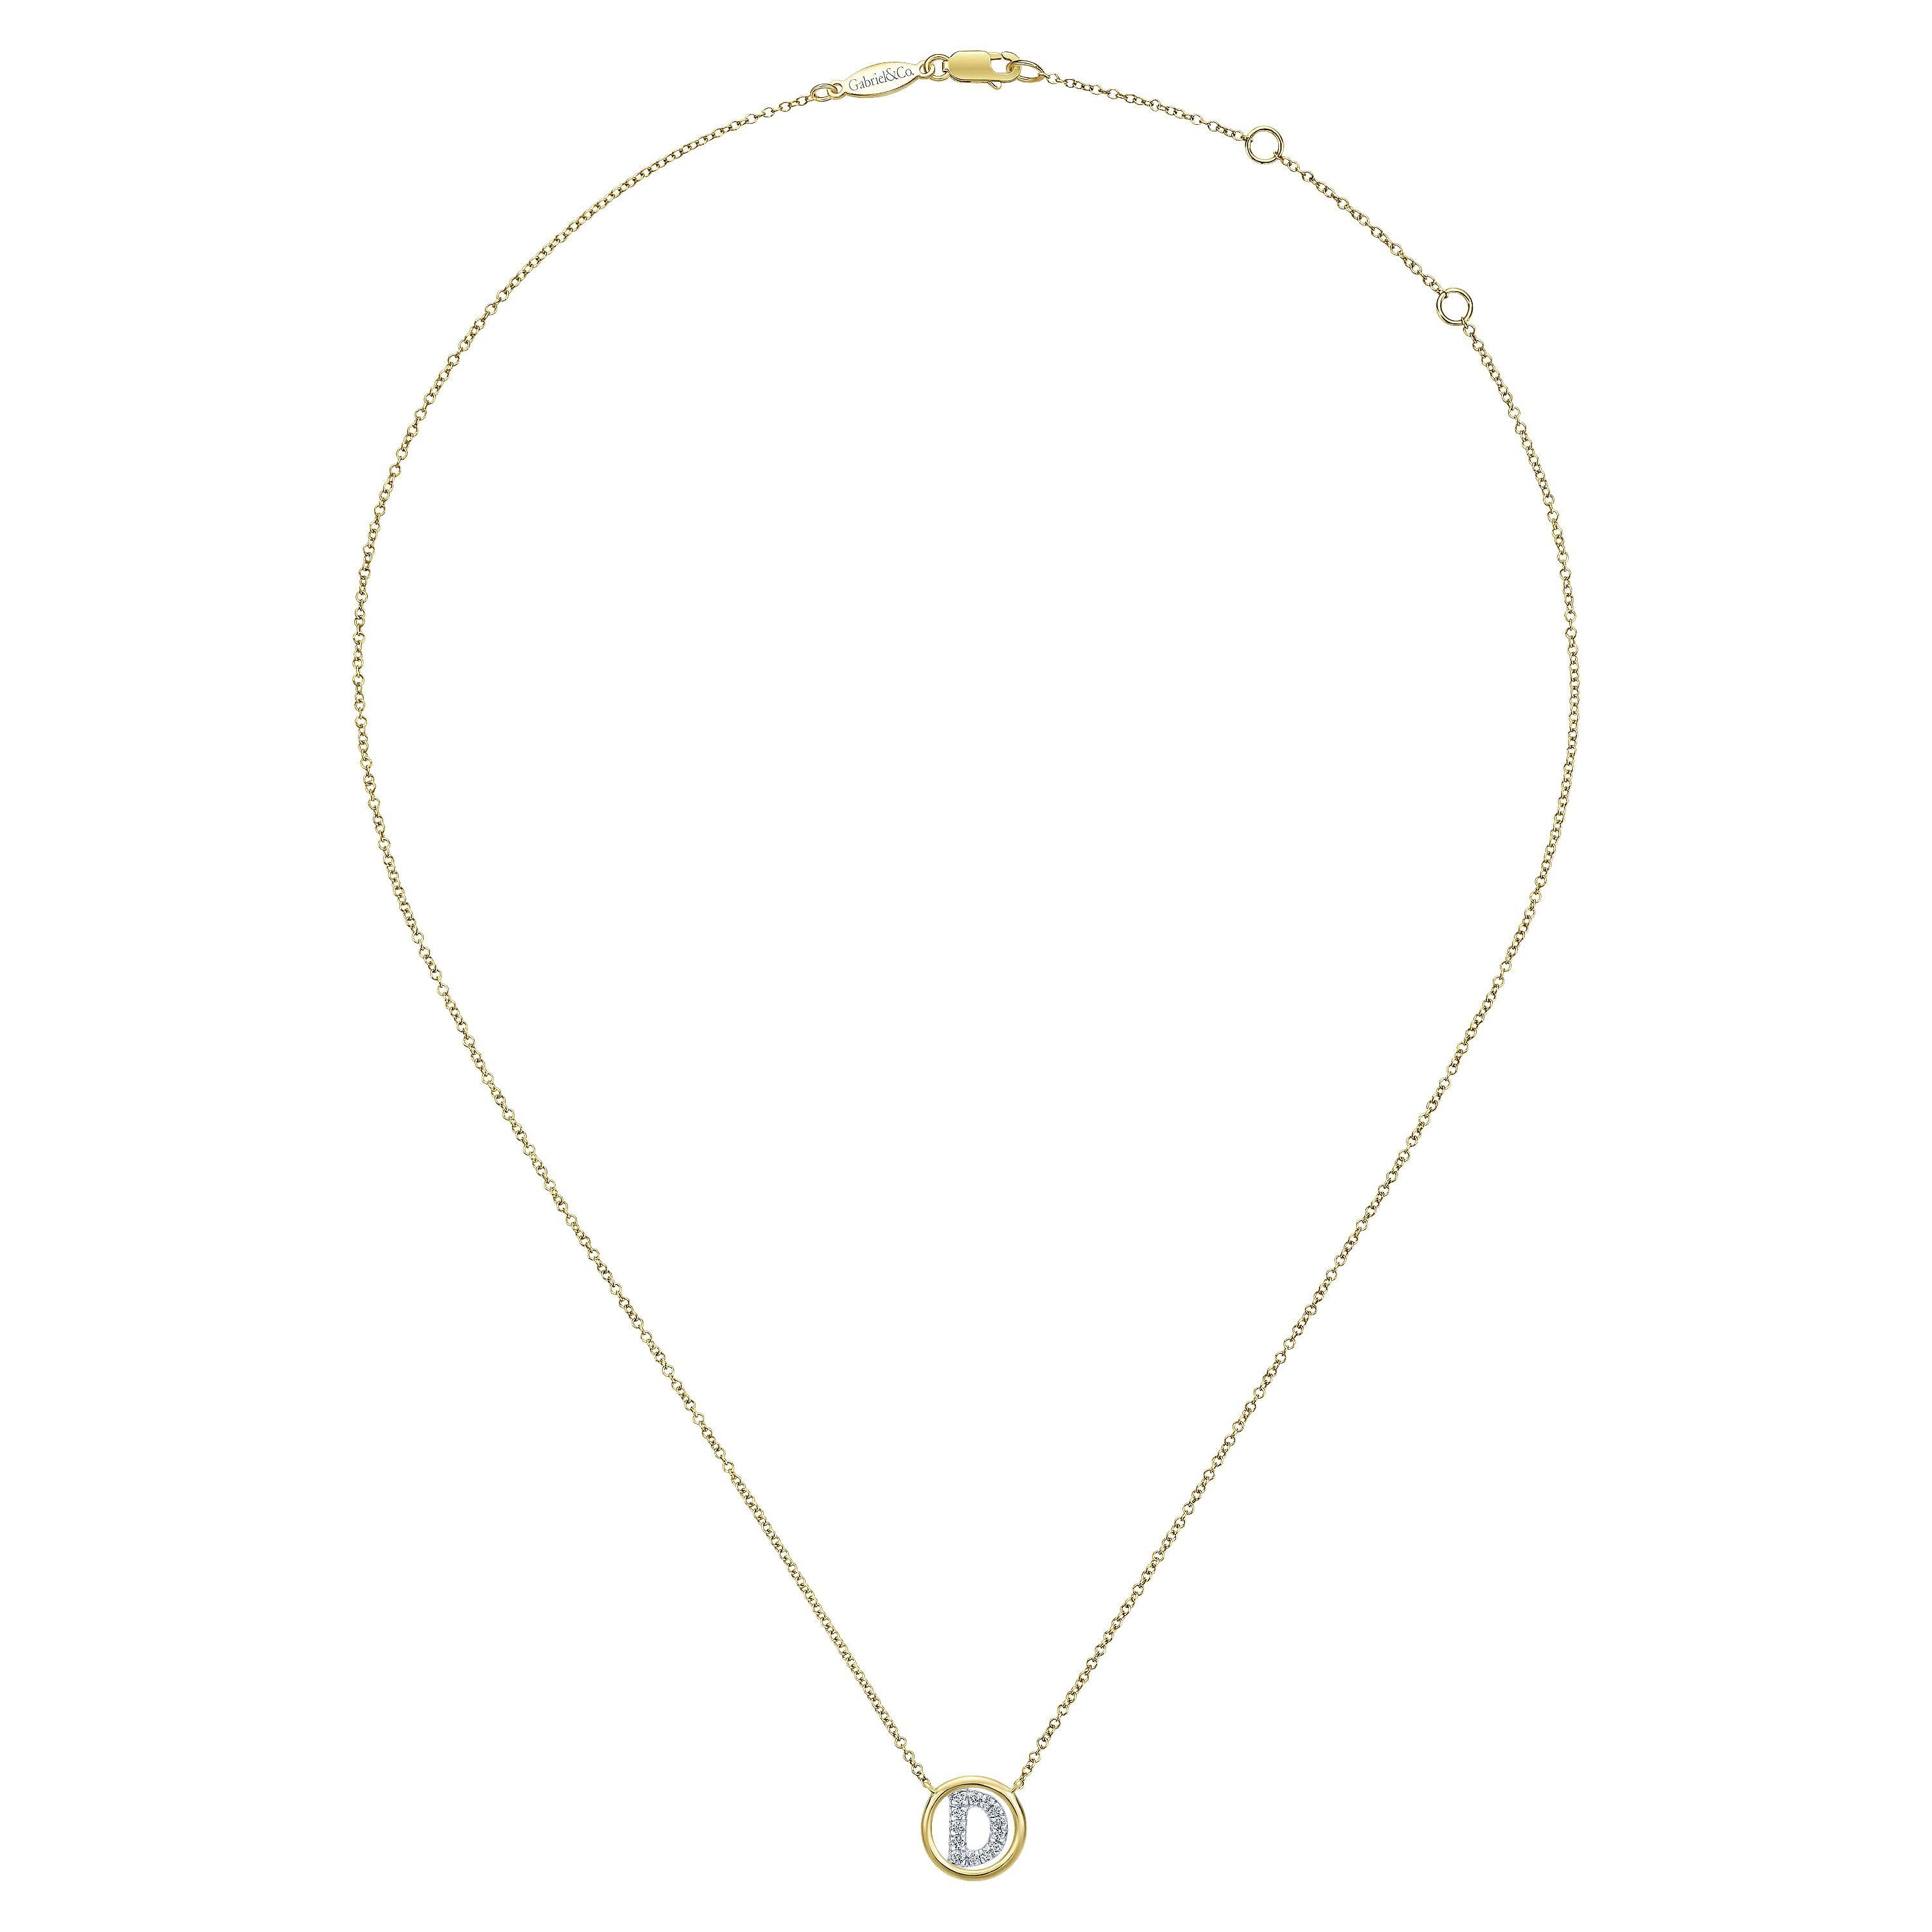 14K Yellow Gold Diamond D Initial Pendant Necklace